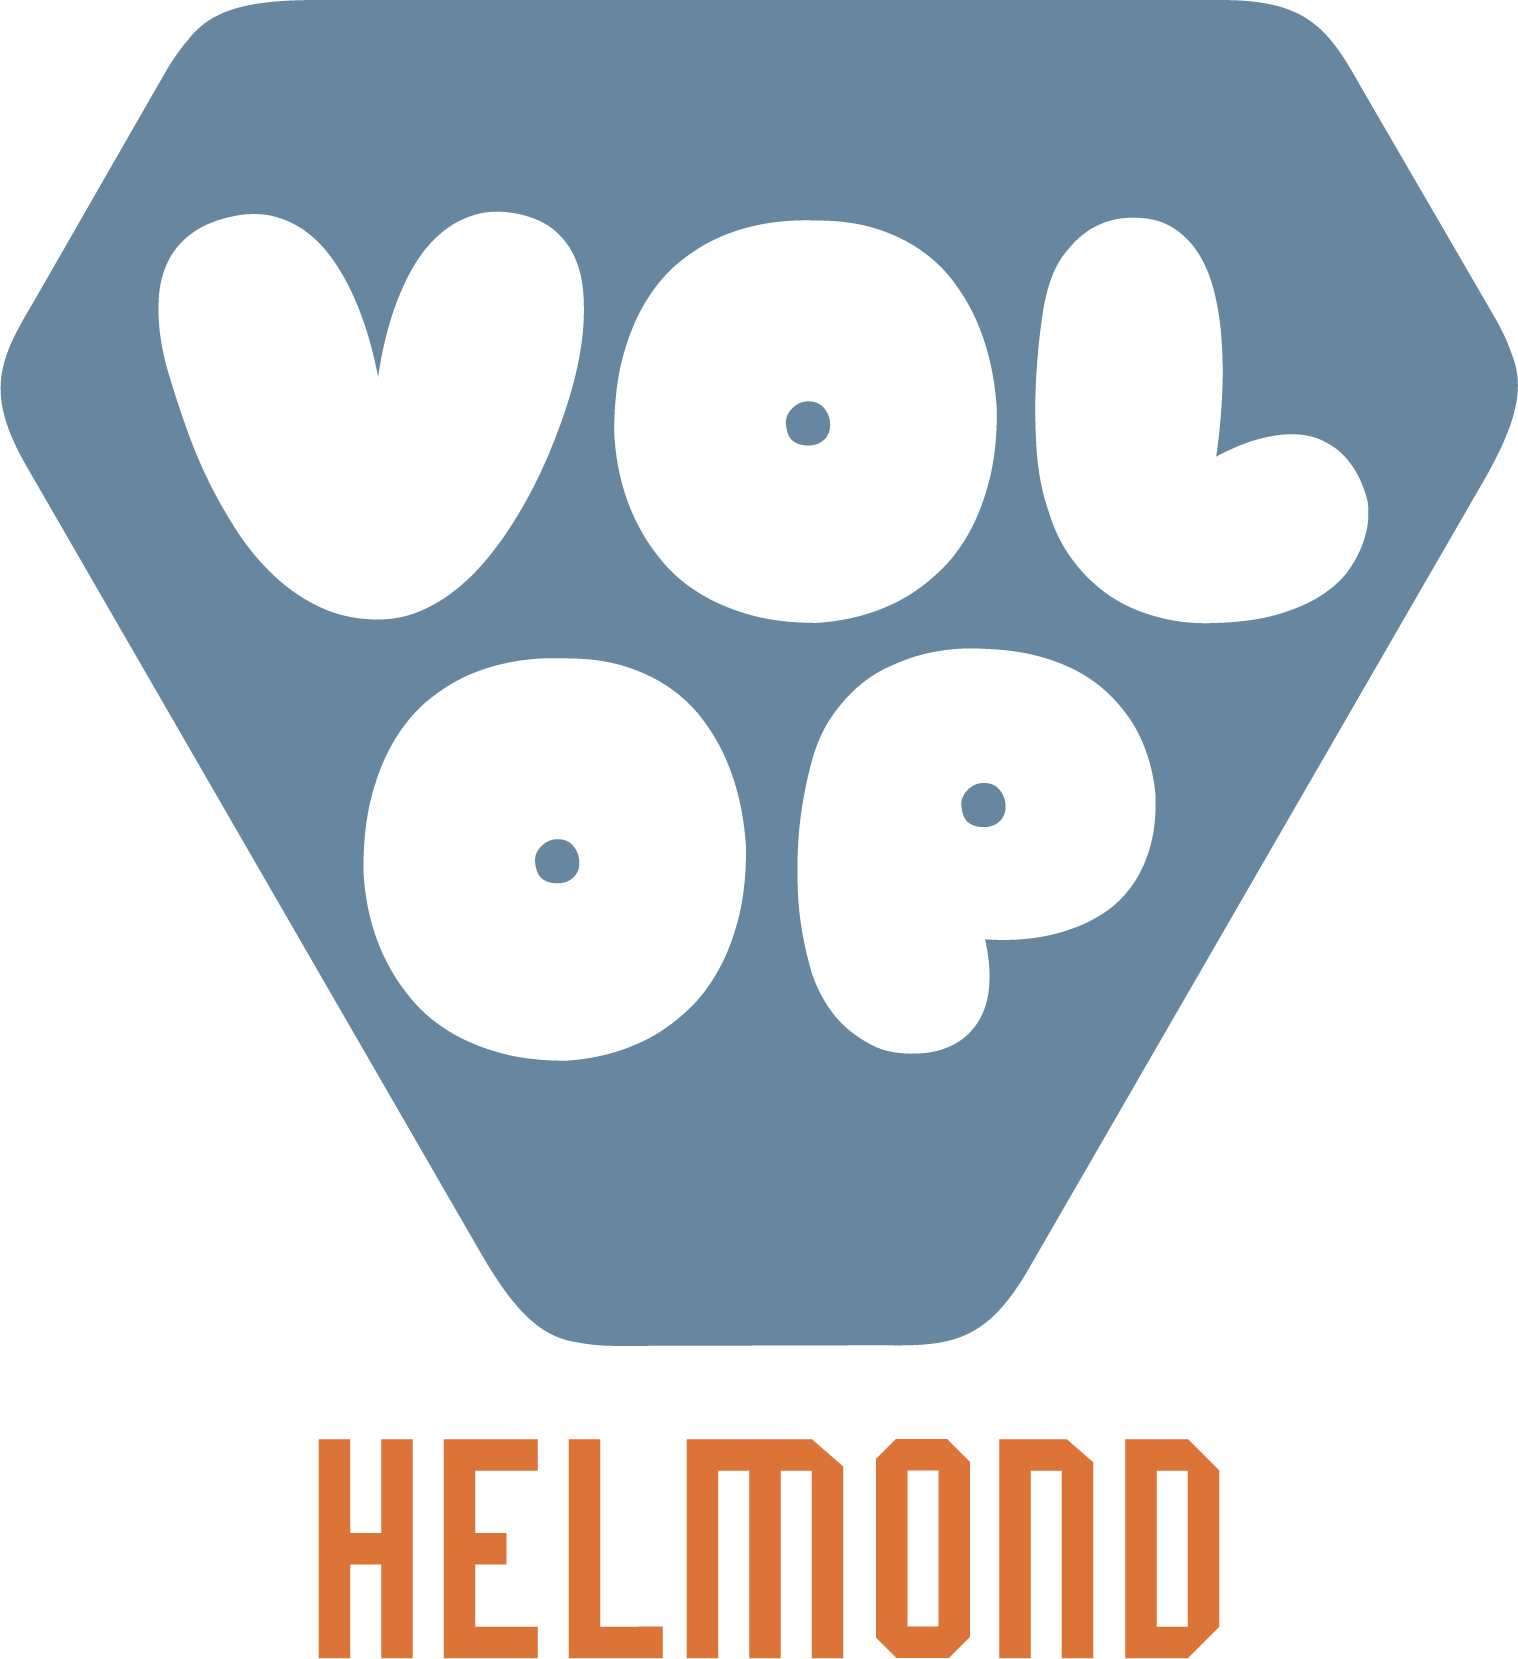 VOLOP Helmond